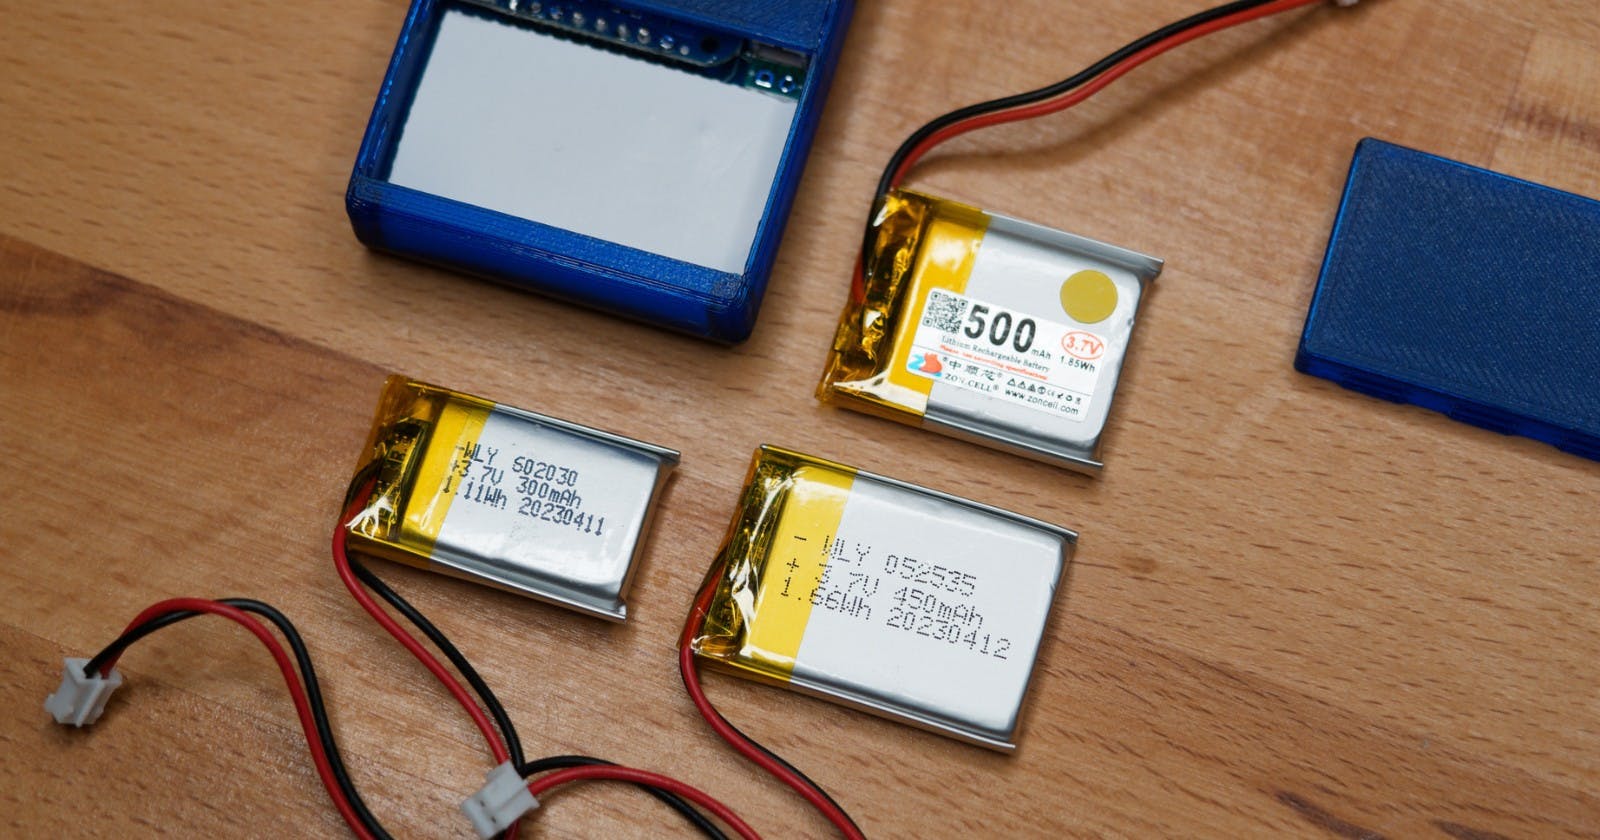 3 different LiPo batteries